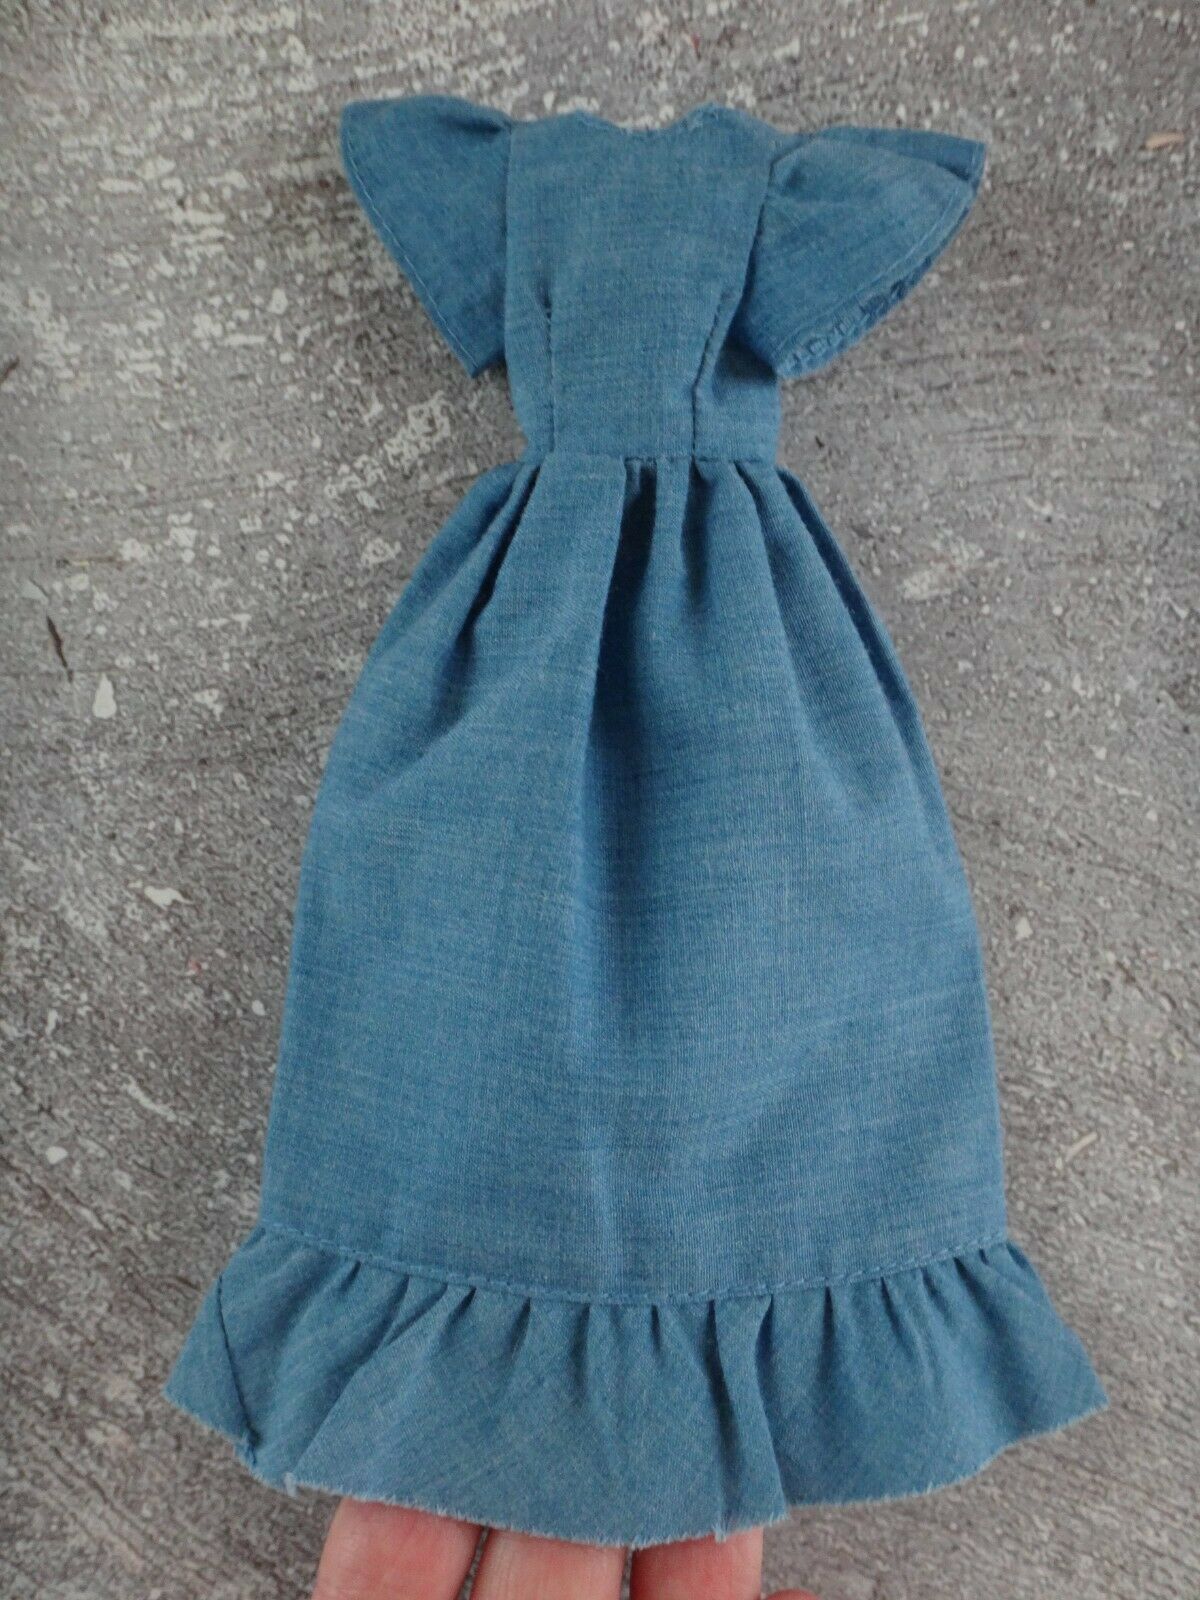 Vintage Sunshine Family Dress-up Kit Blue Dress